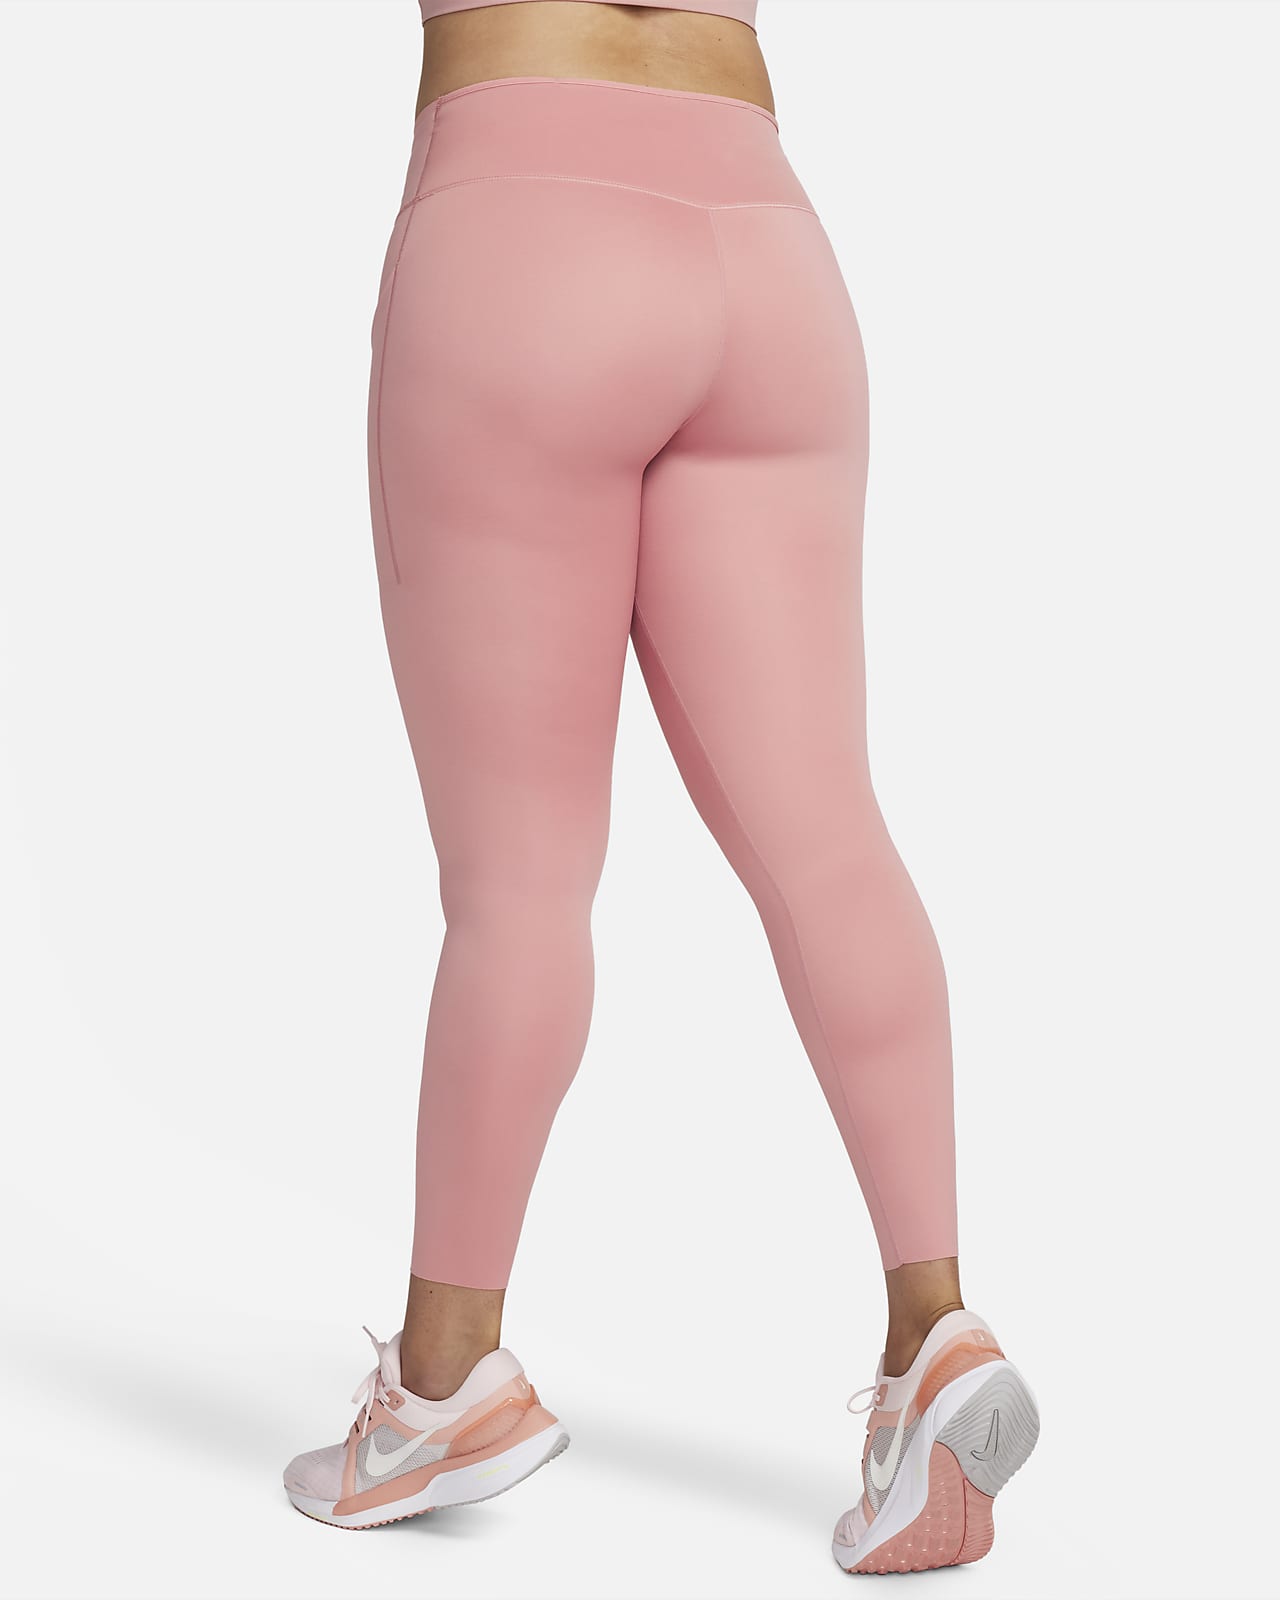 Nike One Girl's Full Length Leggings sz S Tight Fit Mid Rise Pink